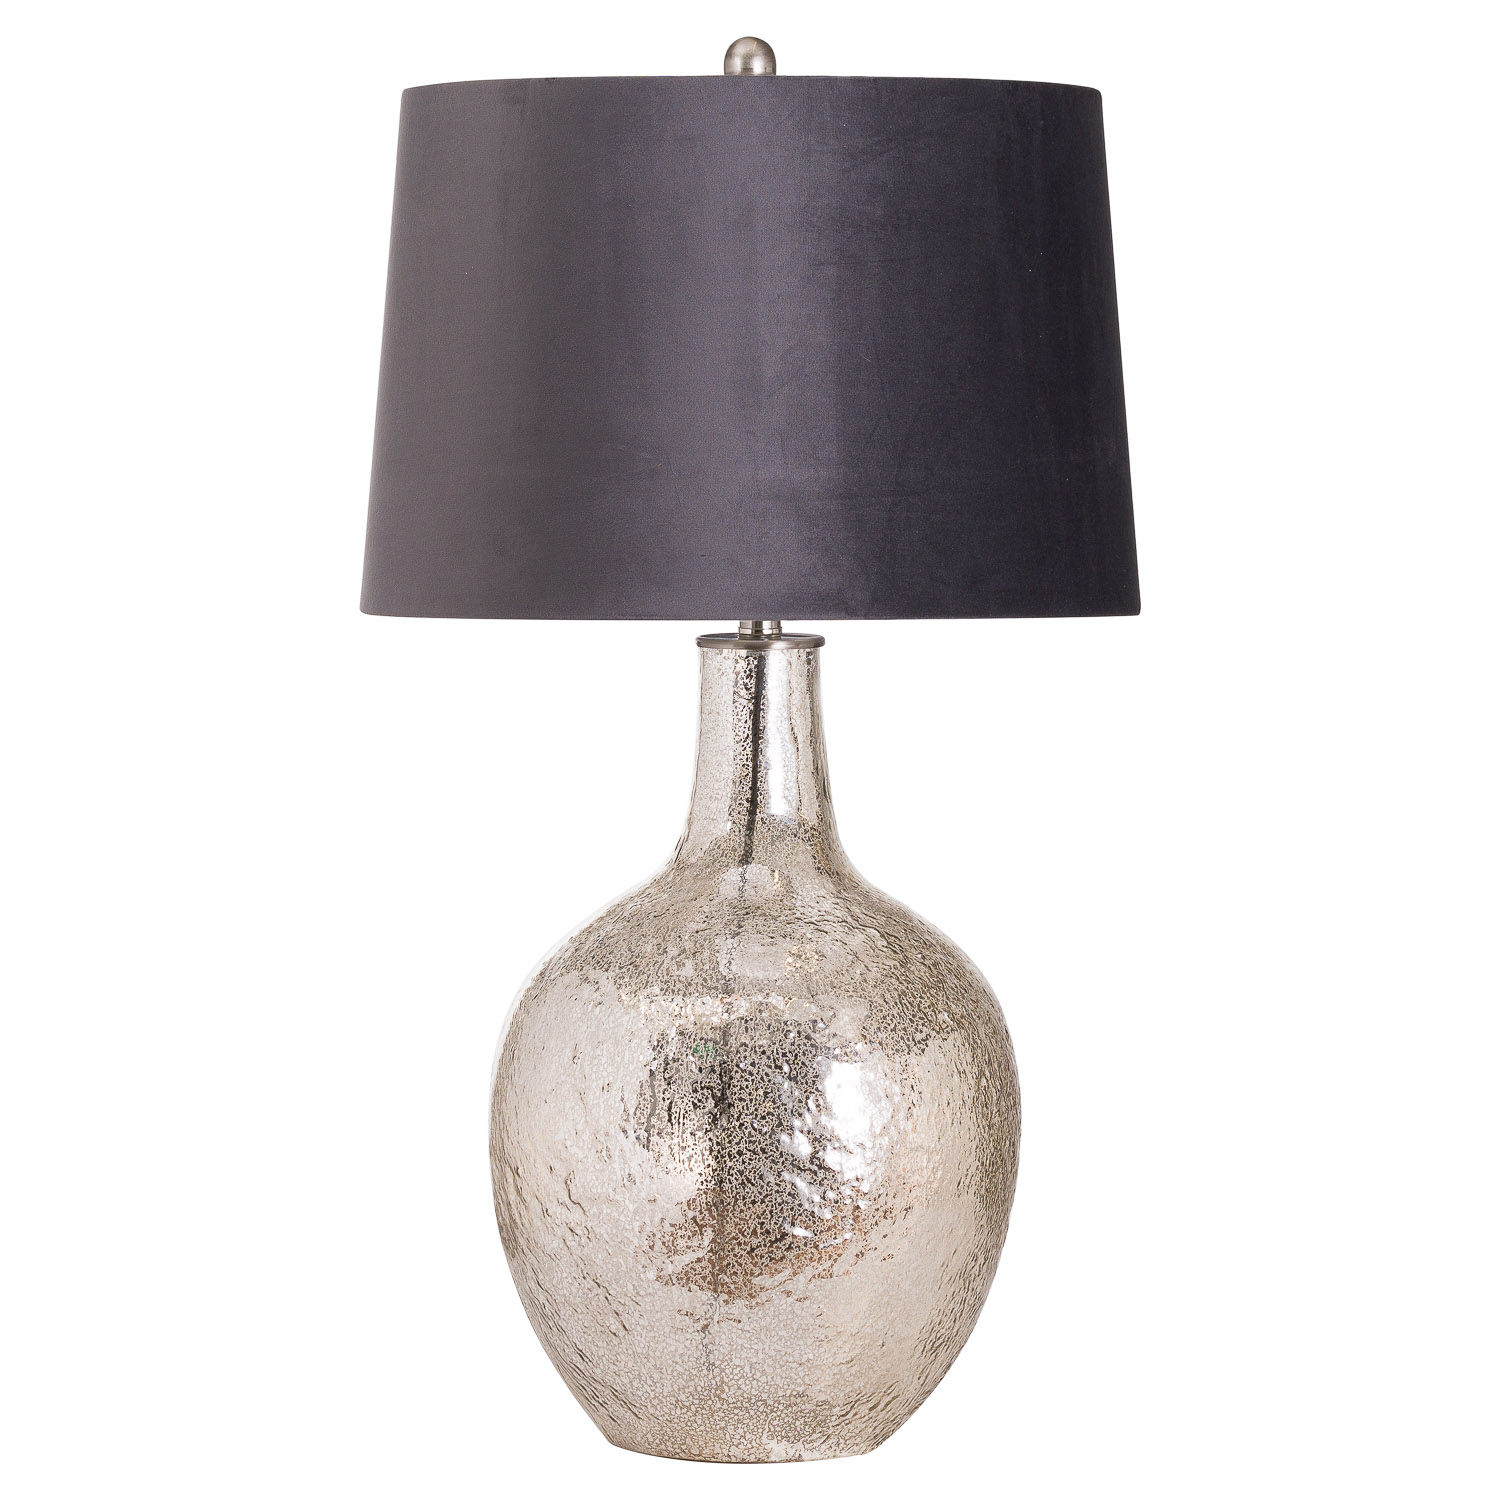 Harmony Table Lamp With Grey Velvet Shade - Image 1